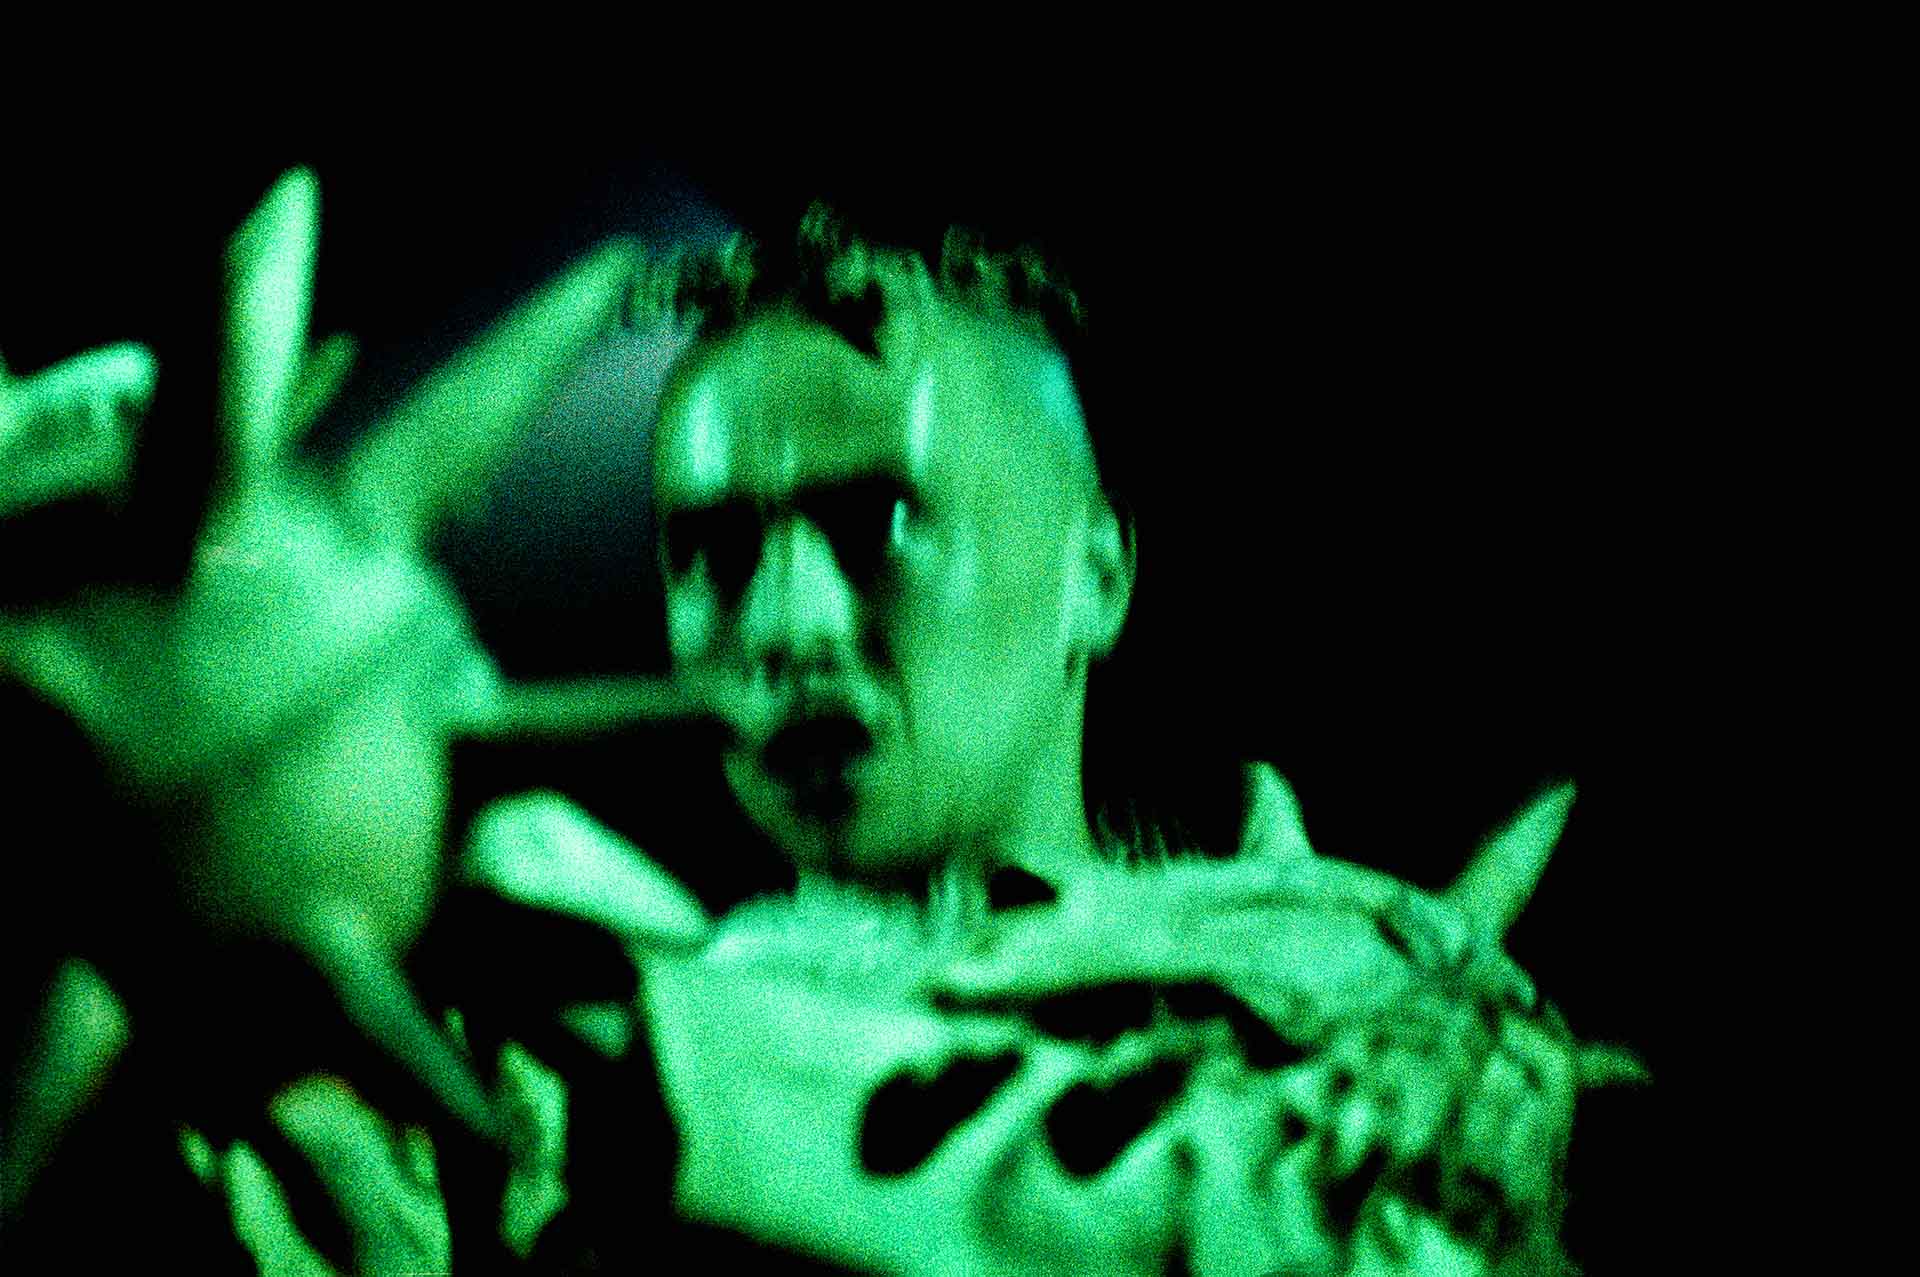 Live photos of experimental New Wave, Noise, Post-Punk, Industrial en Avantgarde bands inge-bekkers-photography-meat-beat-manifesto-tegentonen-paradiso-1989-live-alternative-bands-photography-5915